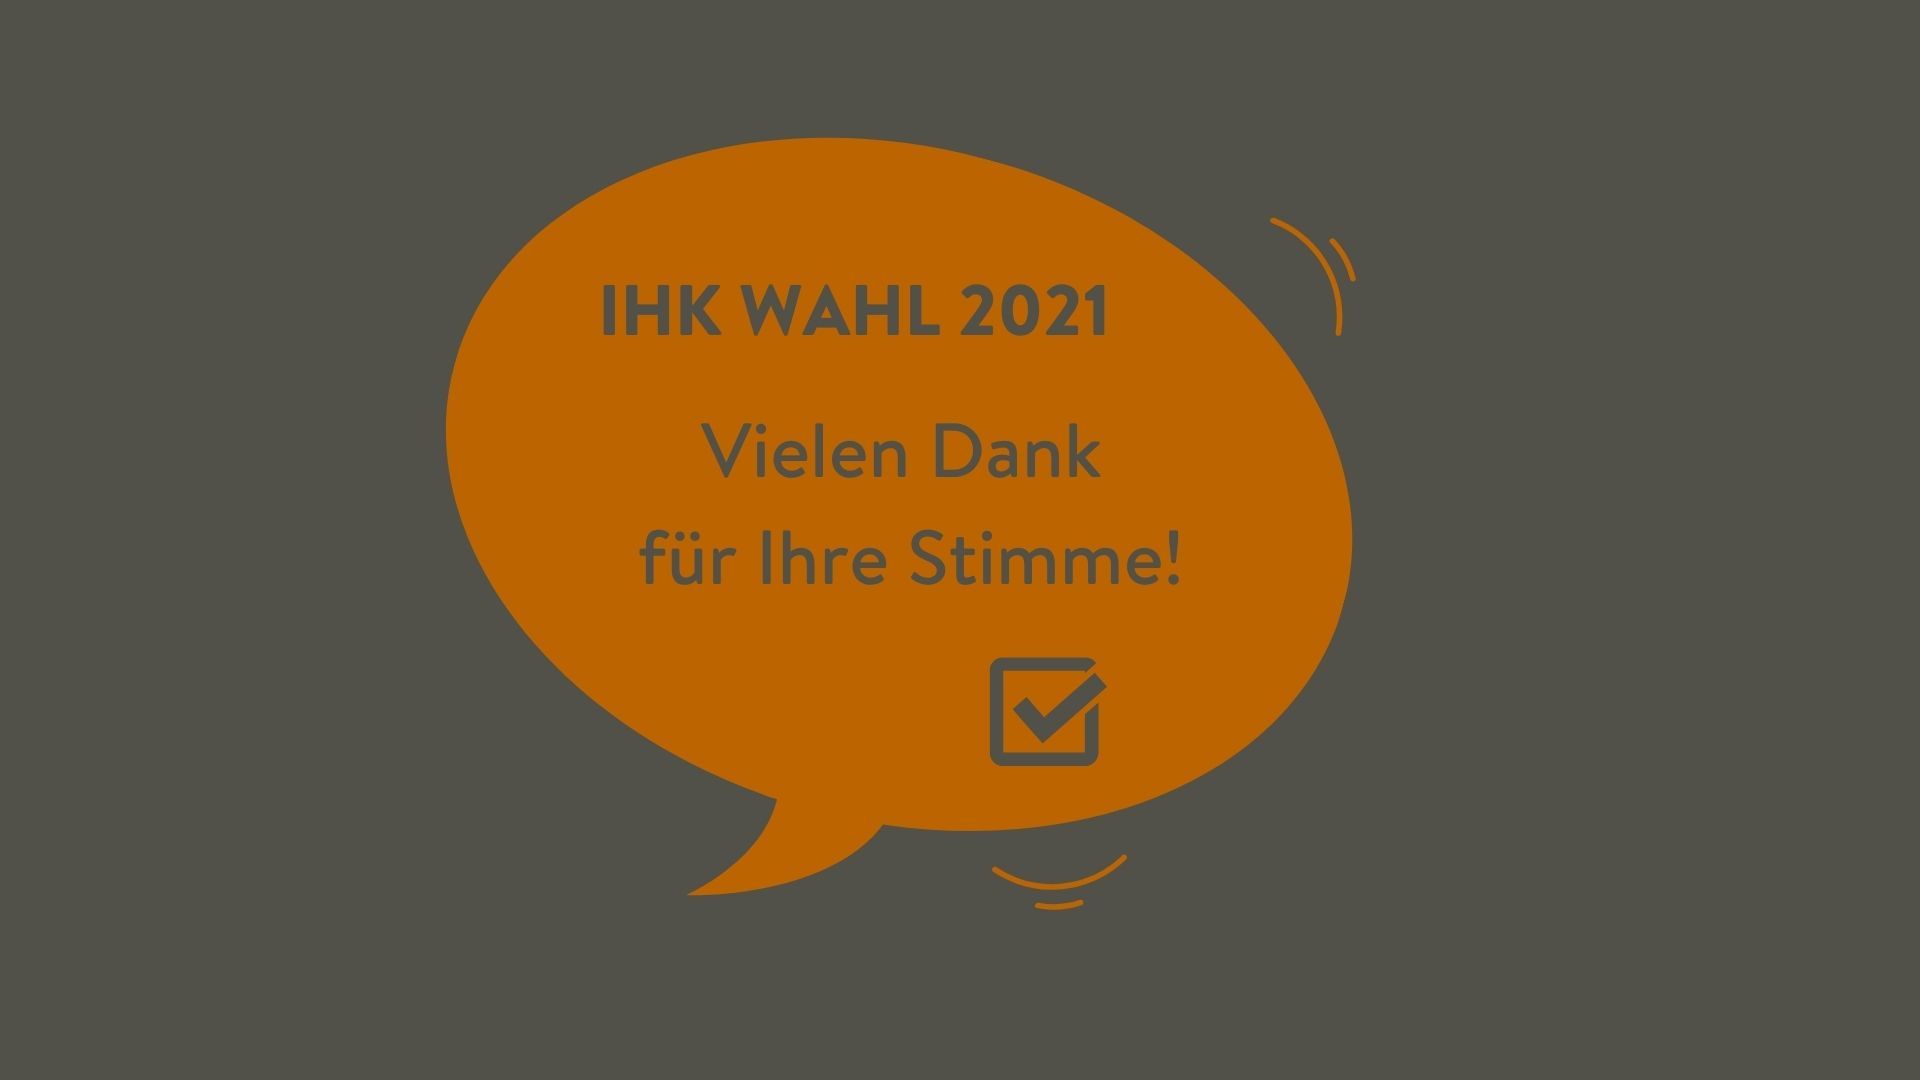 IHK-PlenarWahl-2021-2-1.jpg